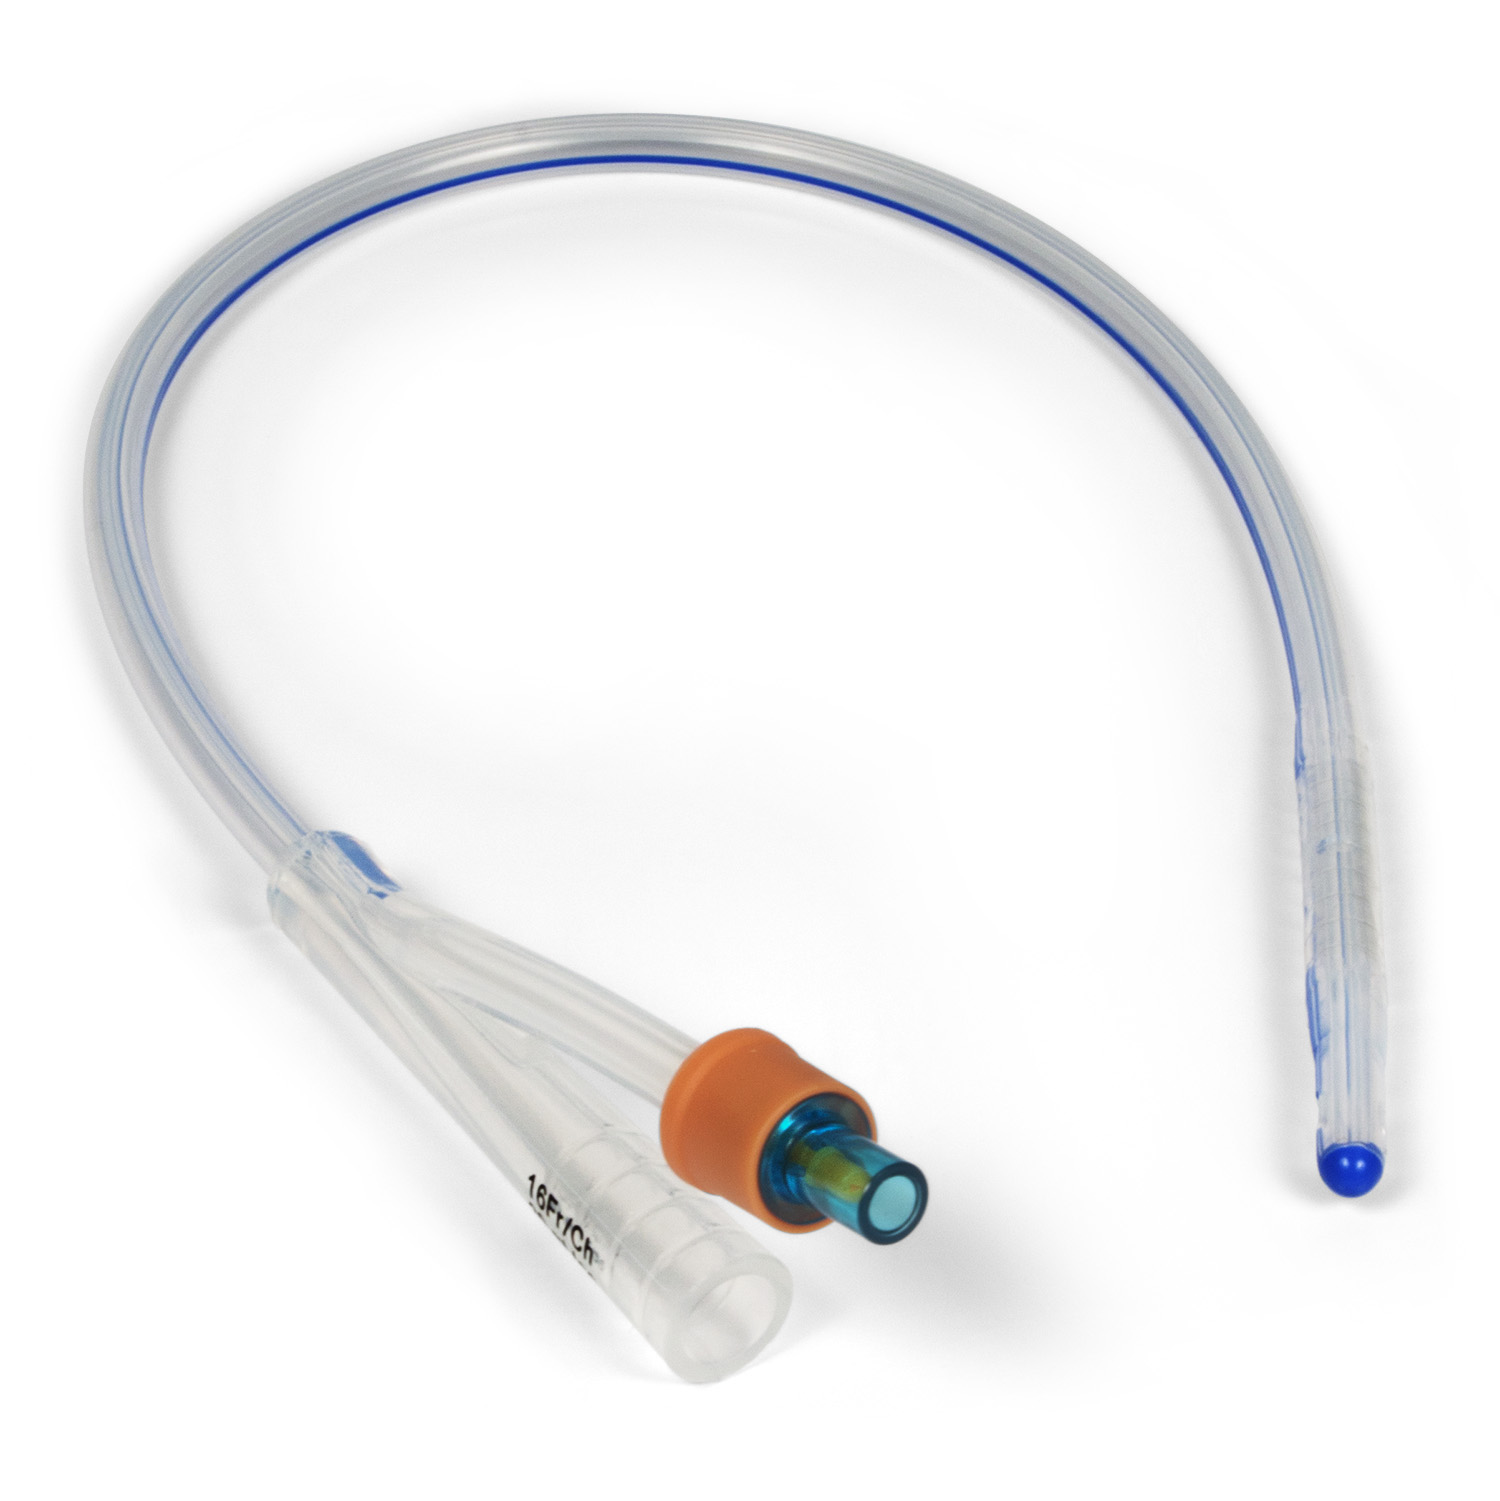 Silicone Foley Catheters 2-way Standard - 26FR / 5-10cc